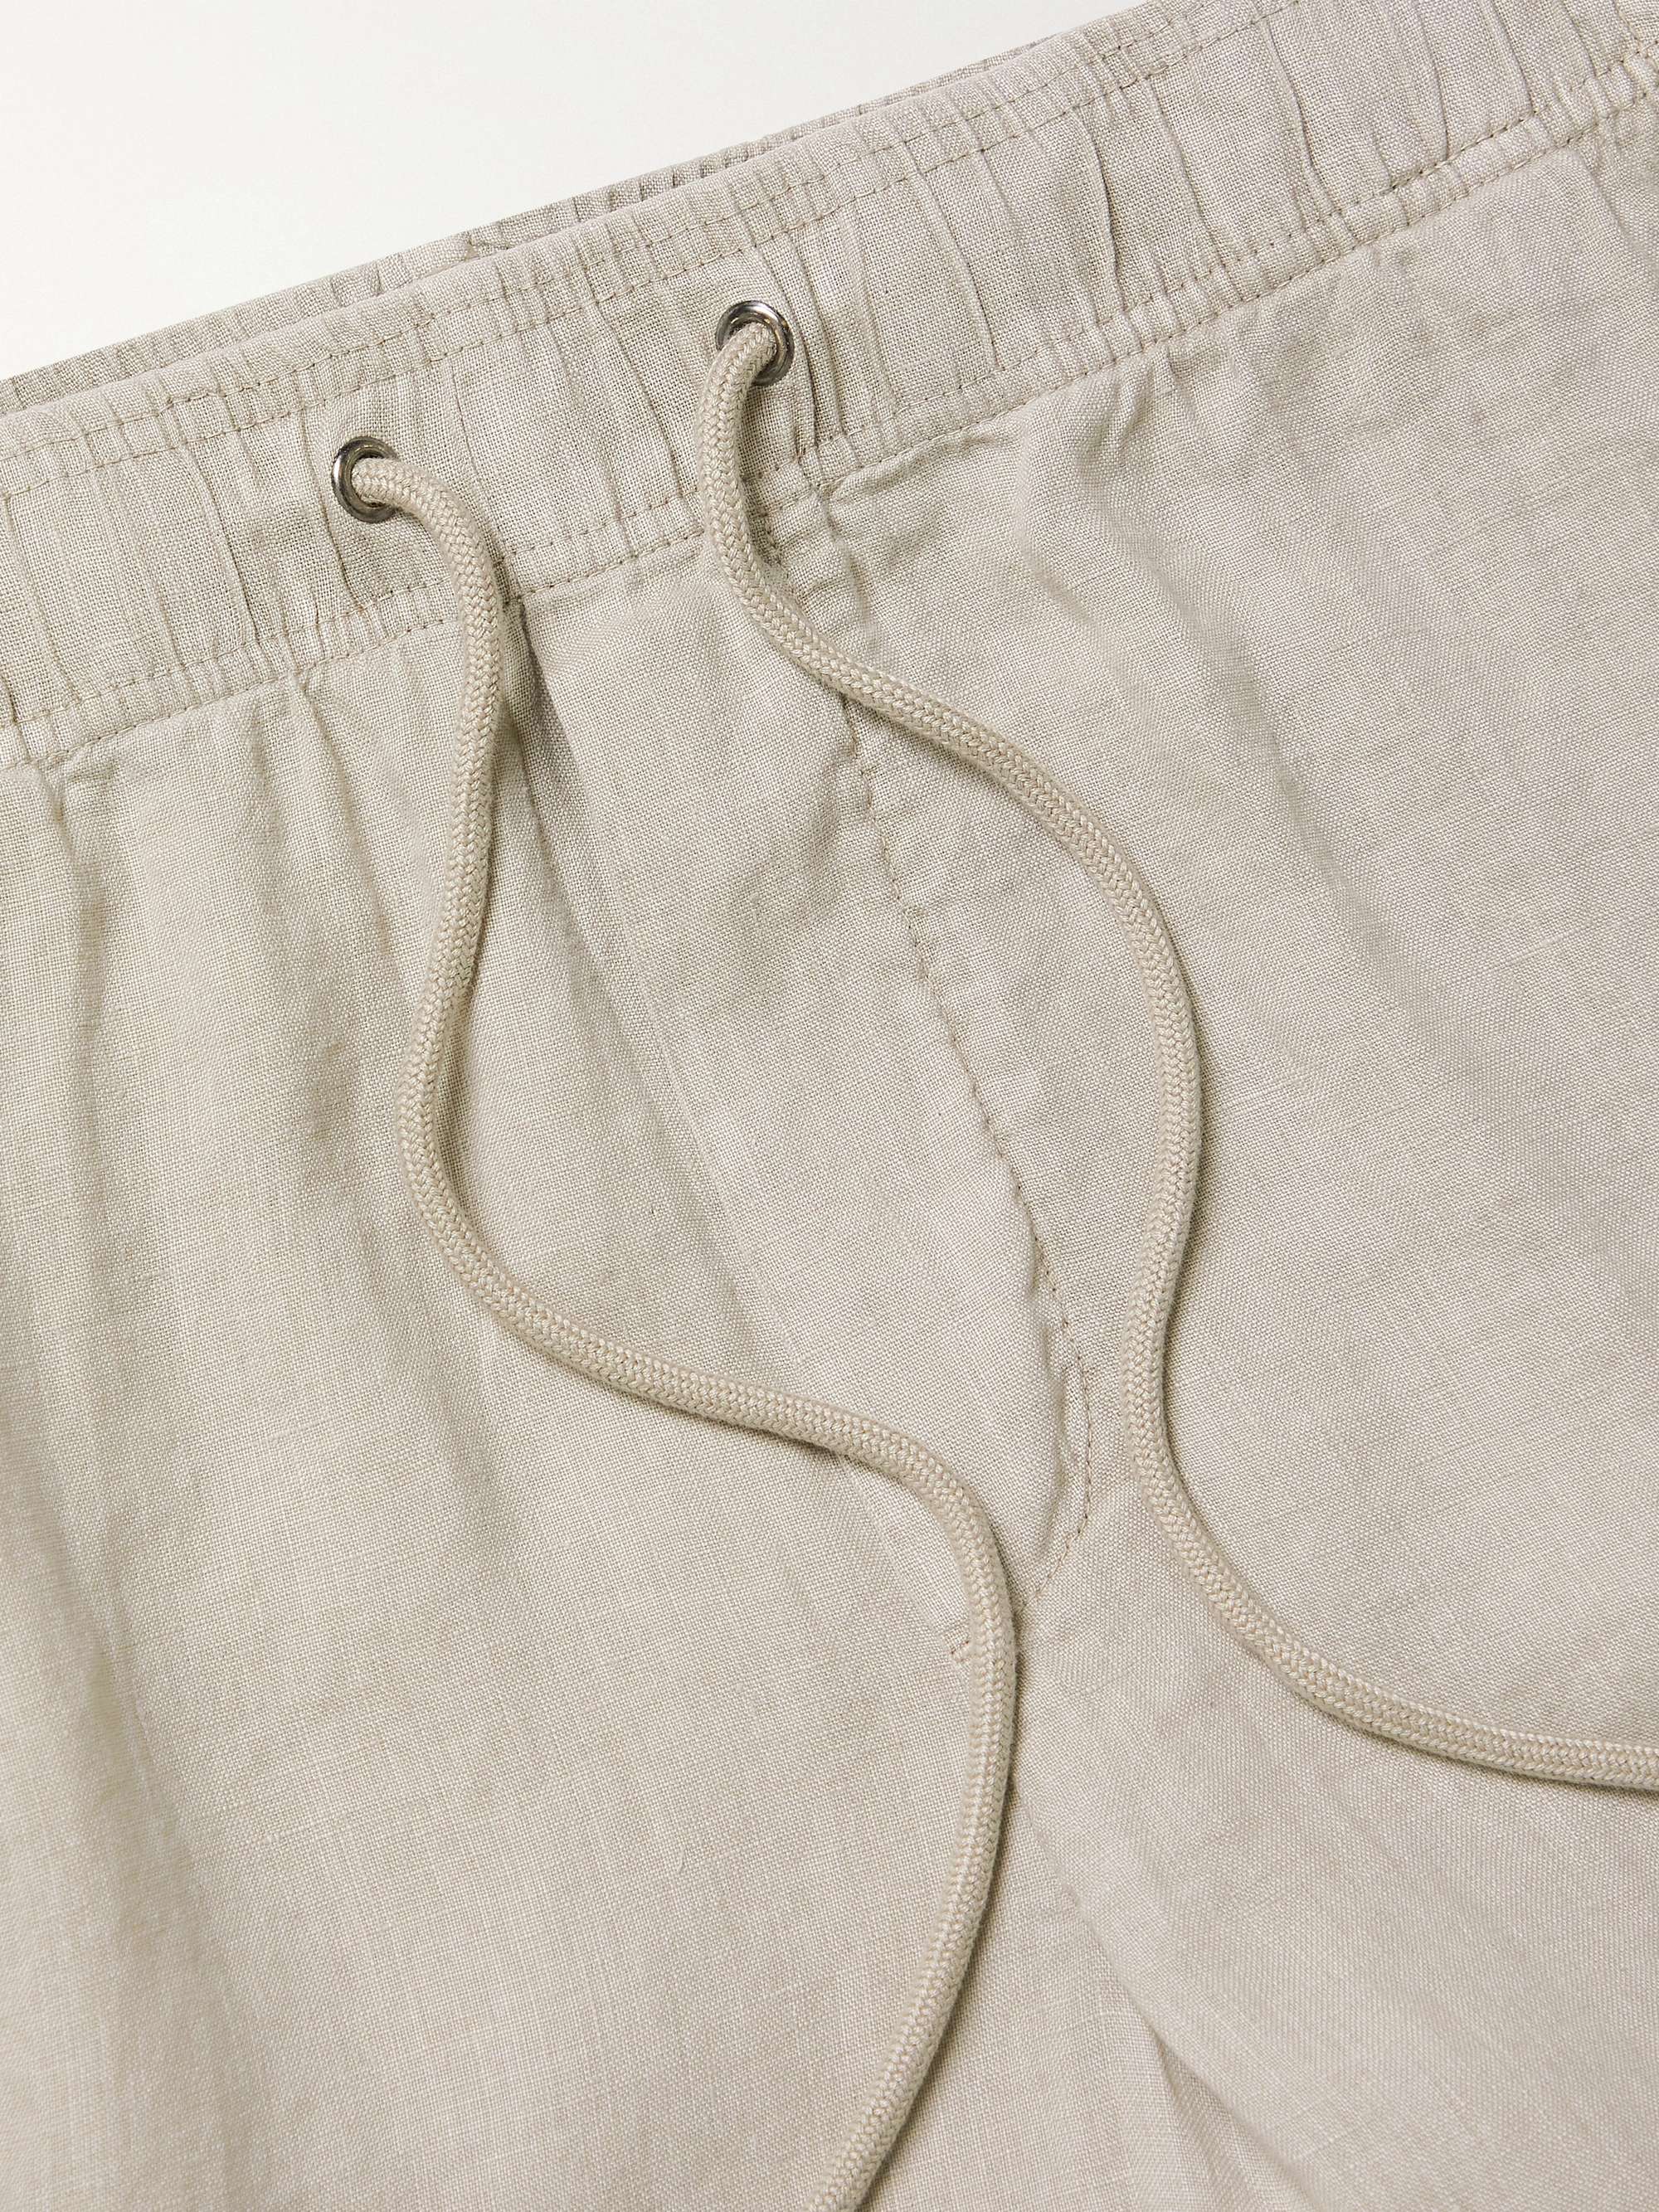 JAMES PERSE Linen Drawstring Shorts